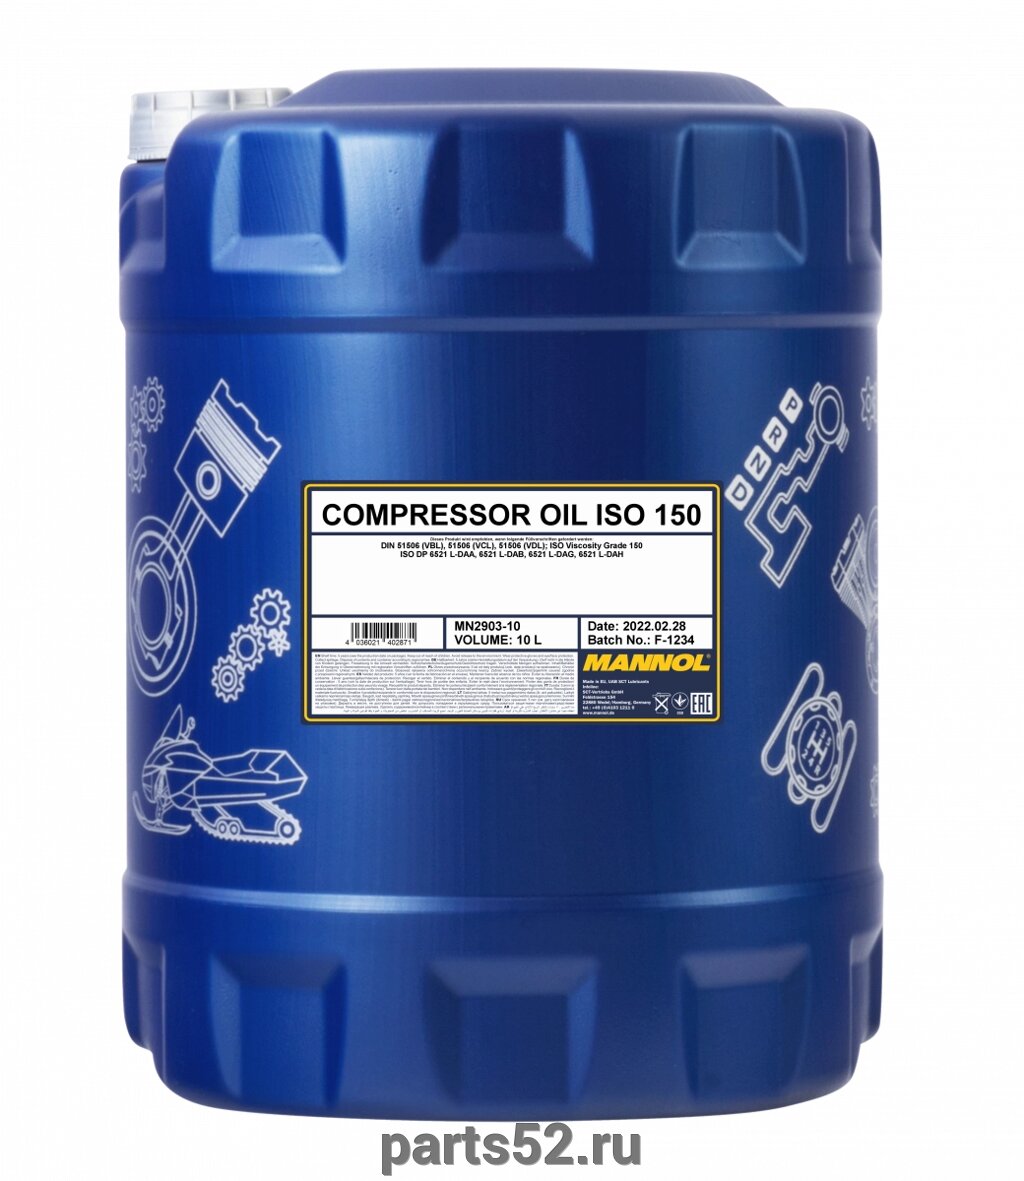 Масло компрессорное MANNOL 2903 Compressor Oil ISO 150, 10 л от компании PARTS52 - фото 1